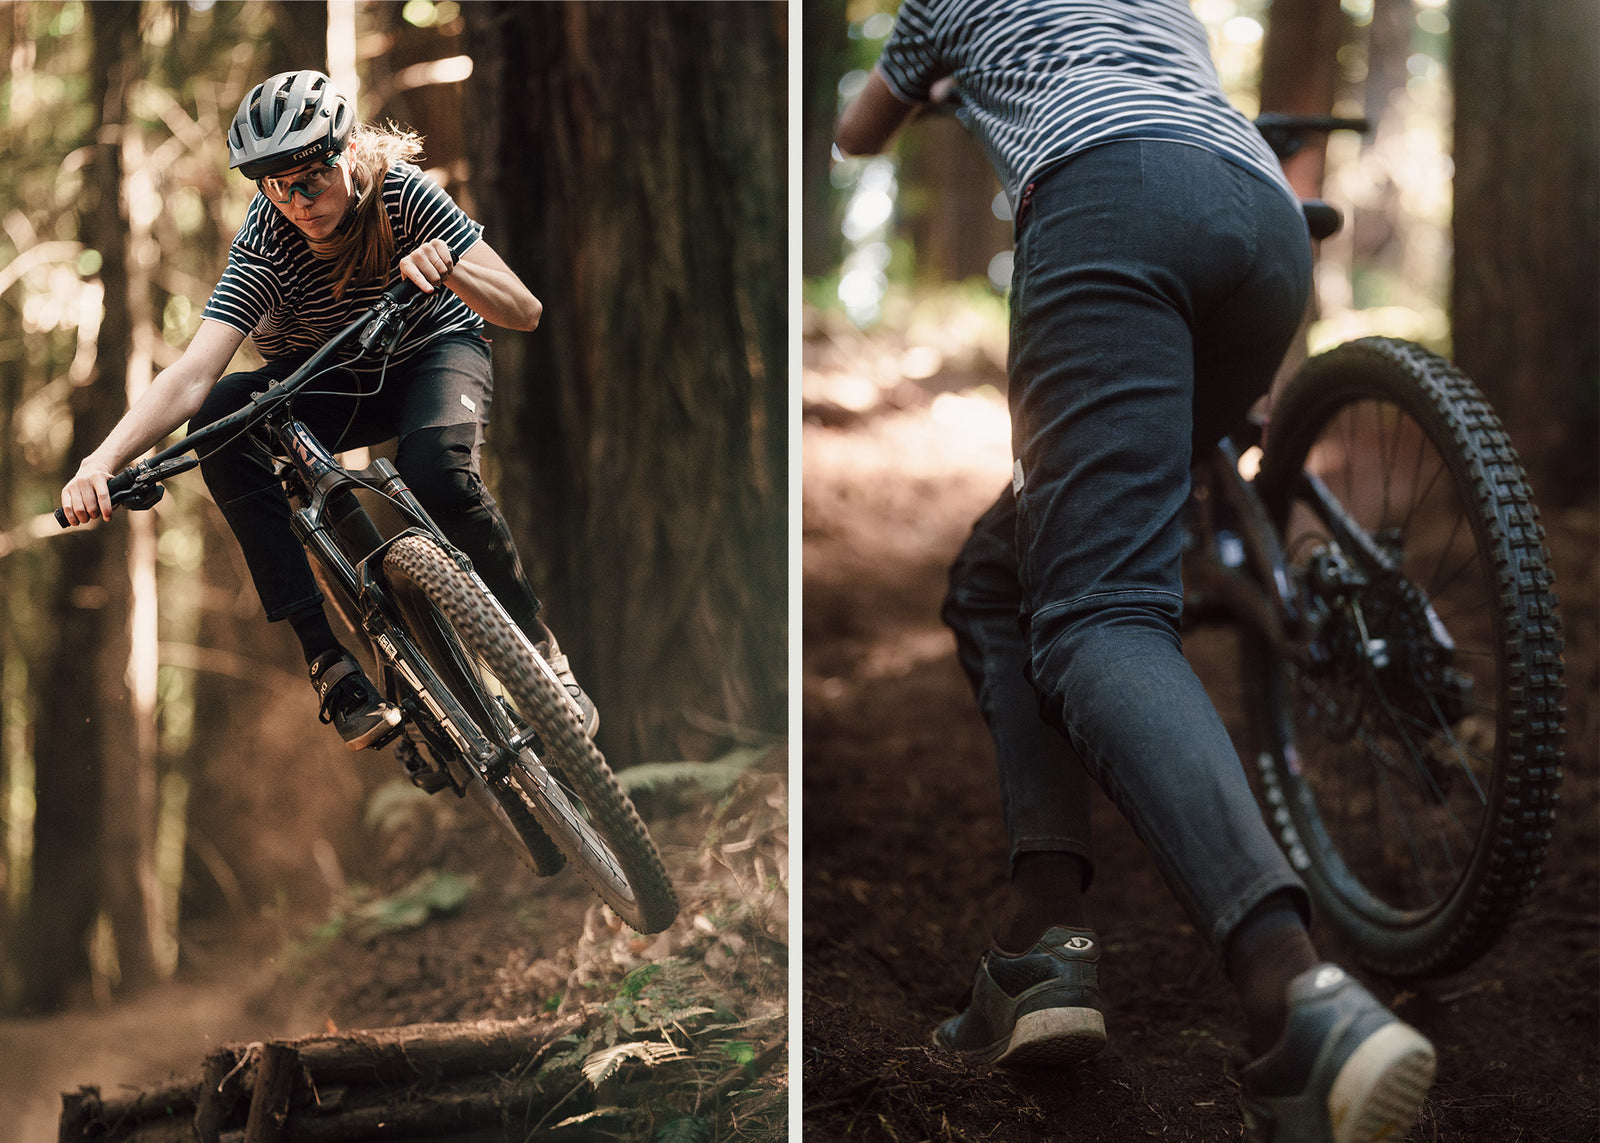 Women's Bike Pant Sizing – Ripton